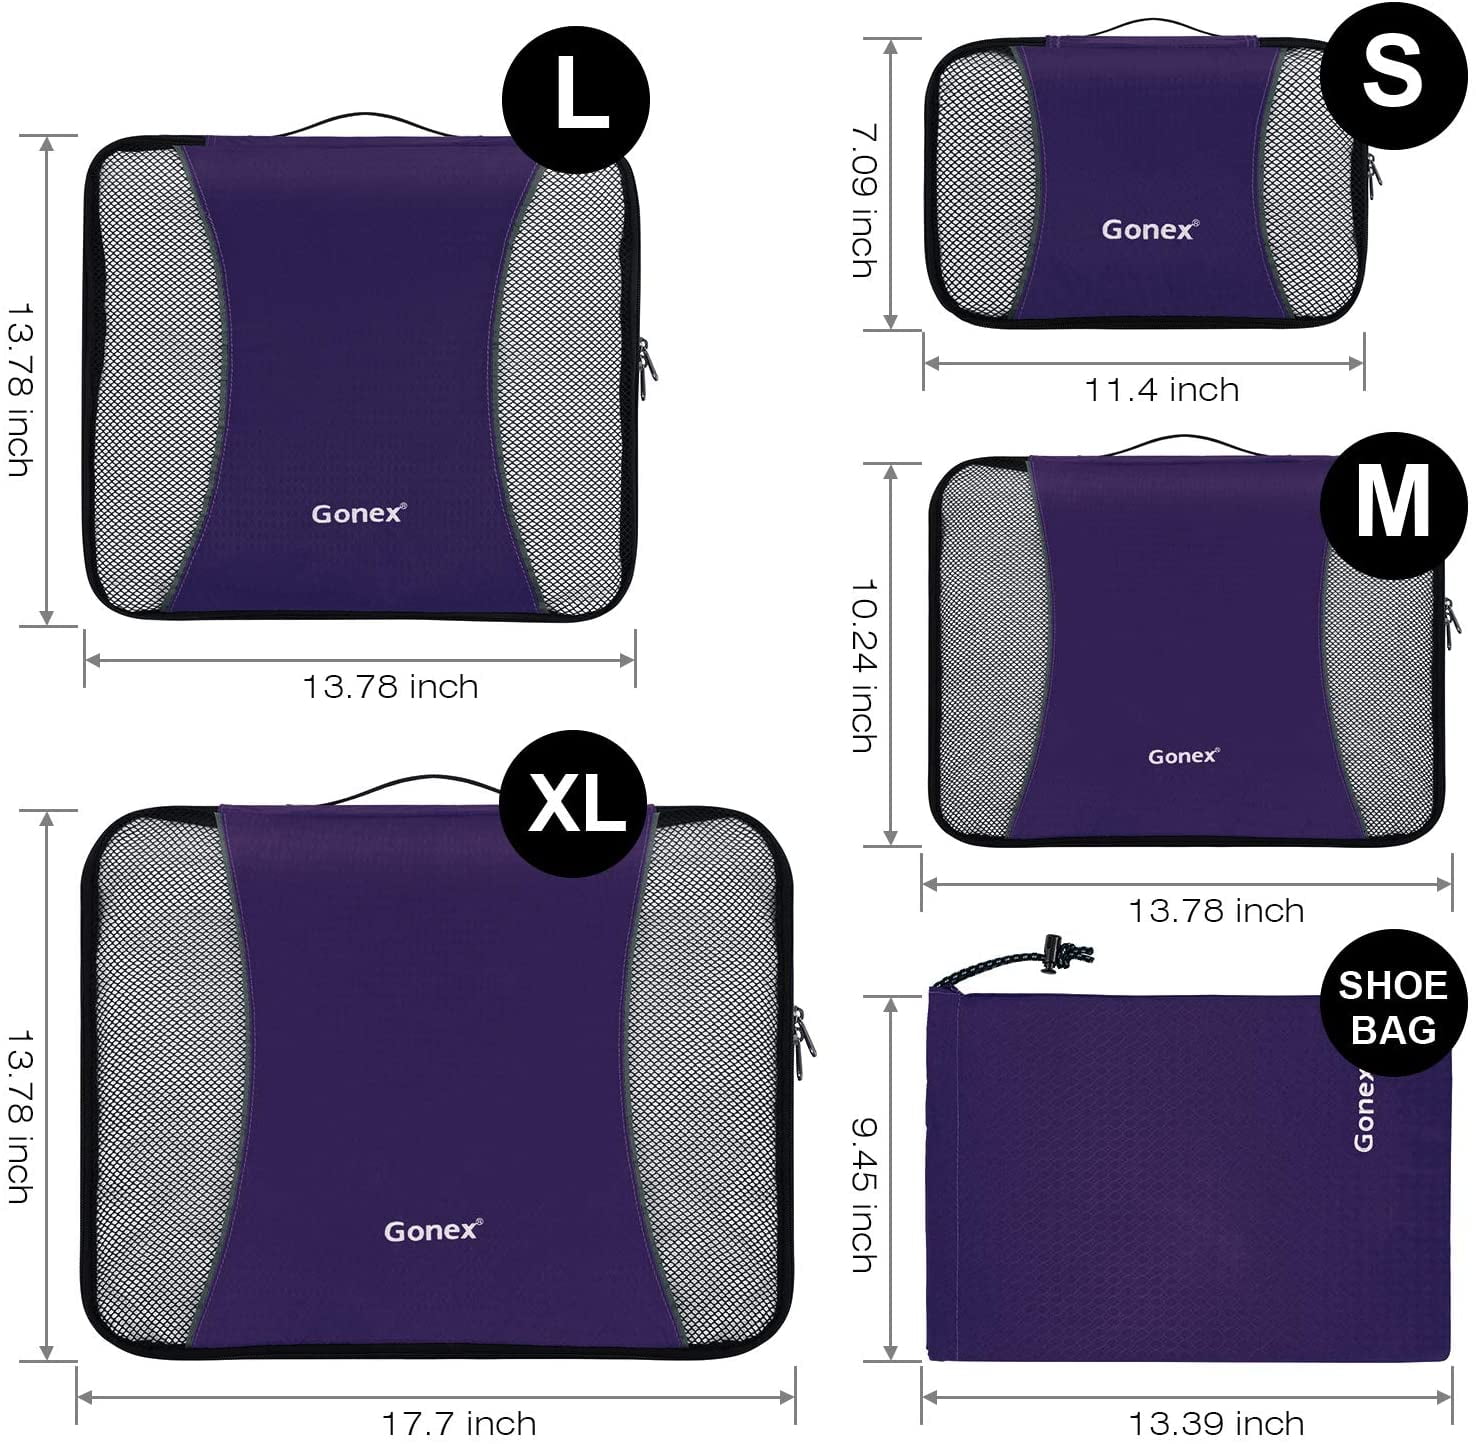 Gonex Travel Packing Cubes 5 Set // 9 Set XL//L//M//S//Shoe Bag Travel Luggage Organizers